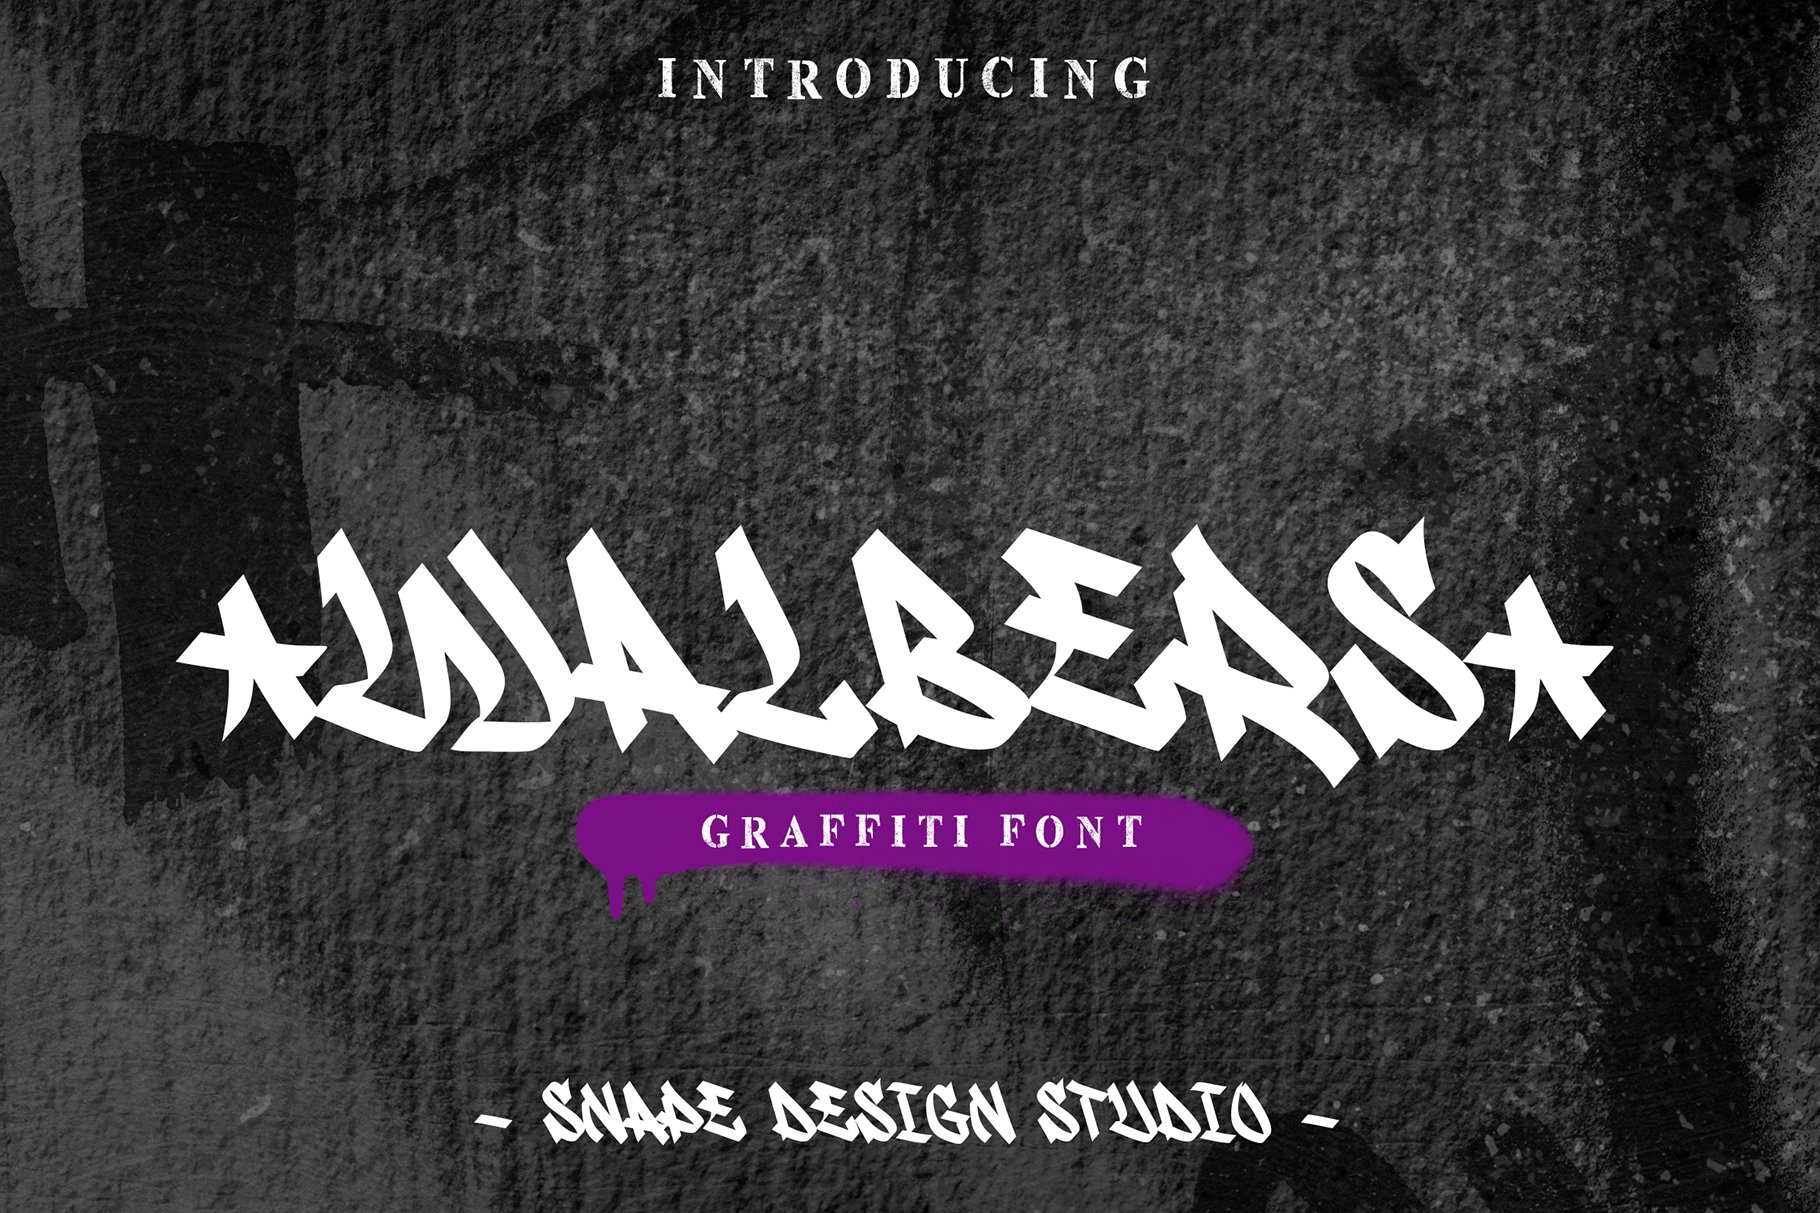 Walbers - Graffiti Font cover image.